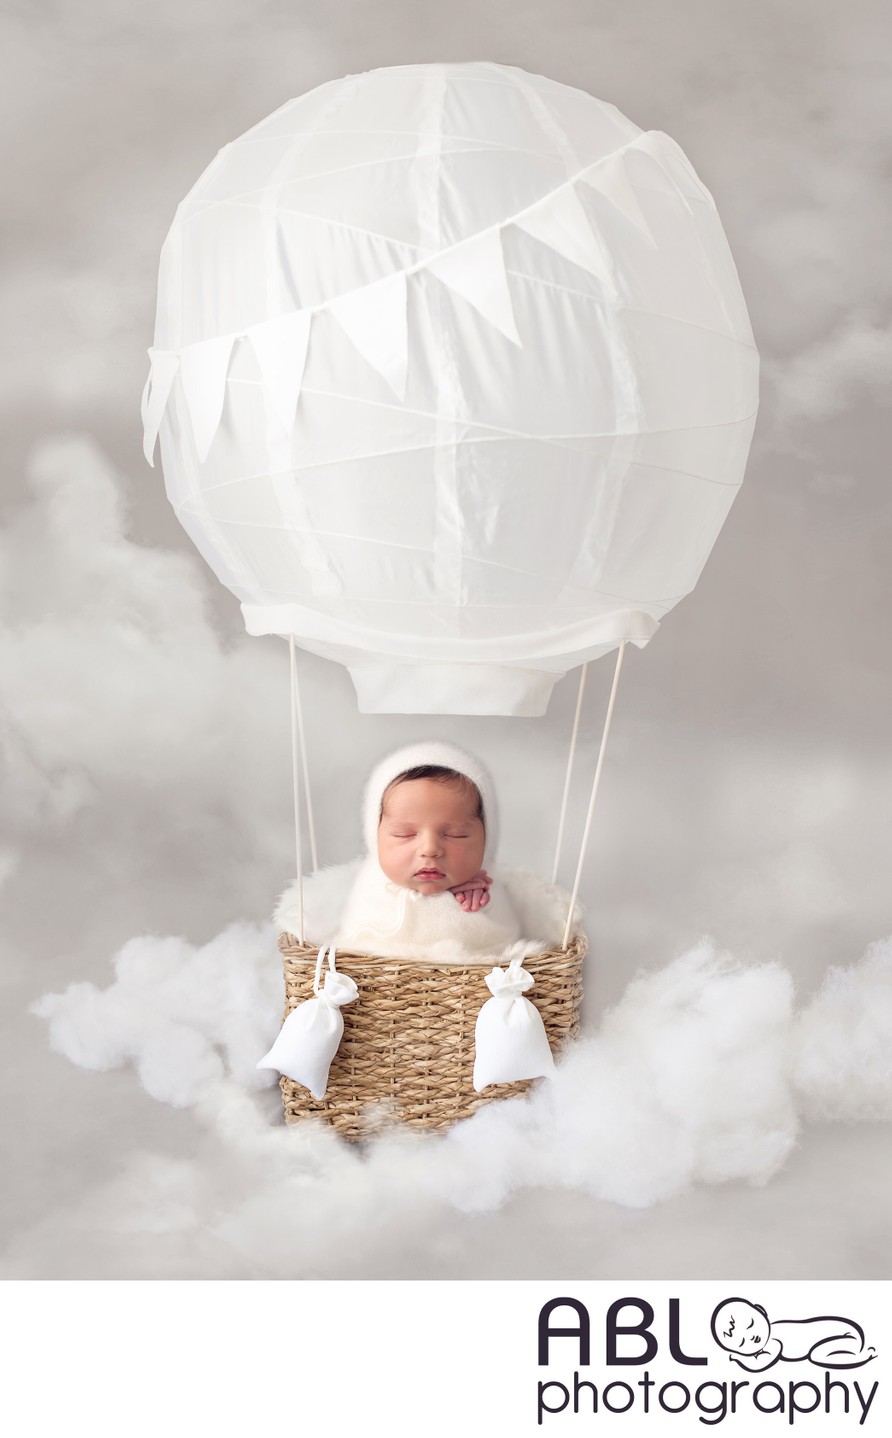 Baby on hot air balloon. 